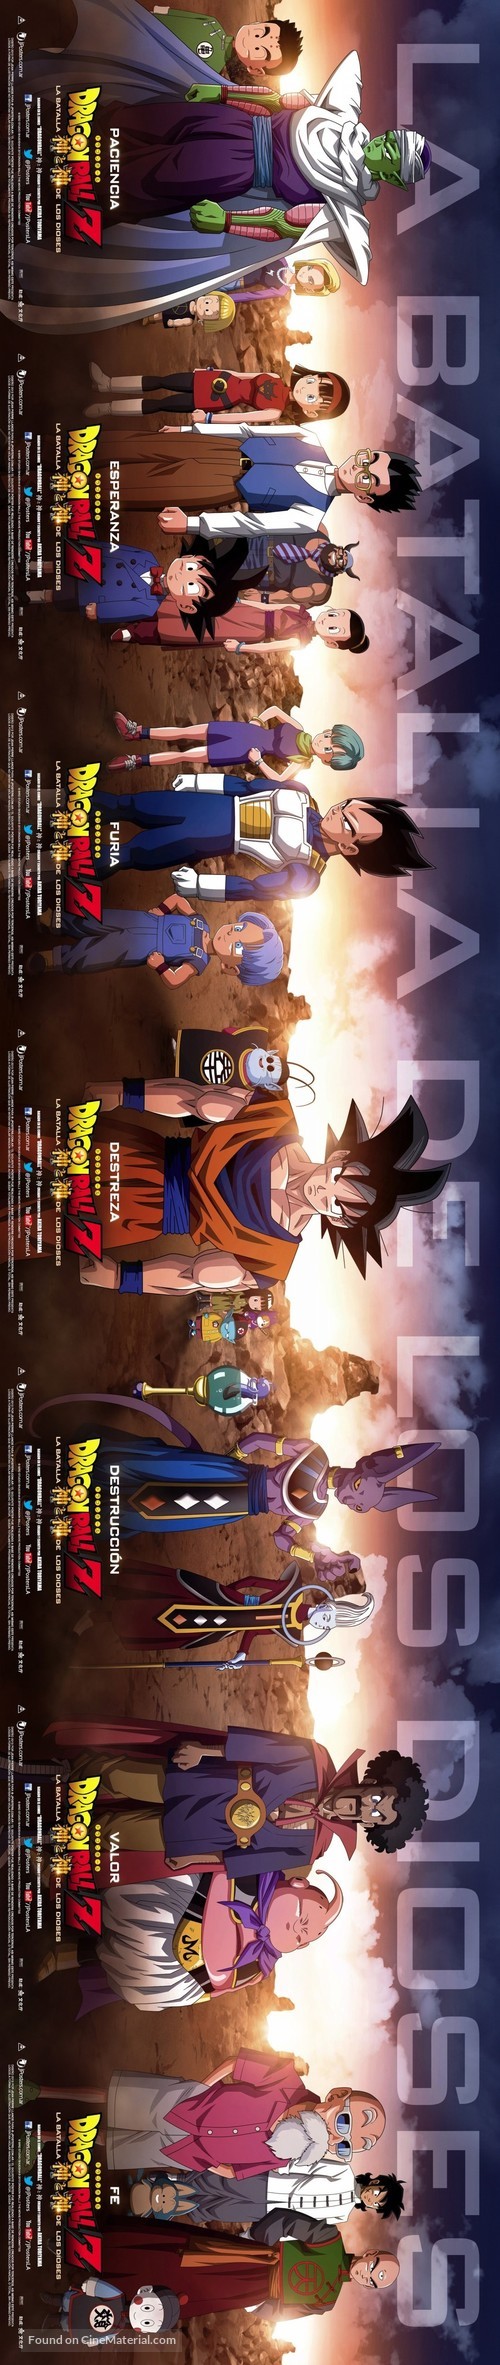 Dragon Ball Z: Battle of Gods - Argentinian poster